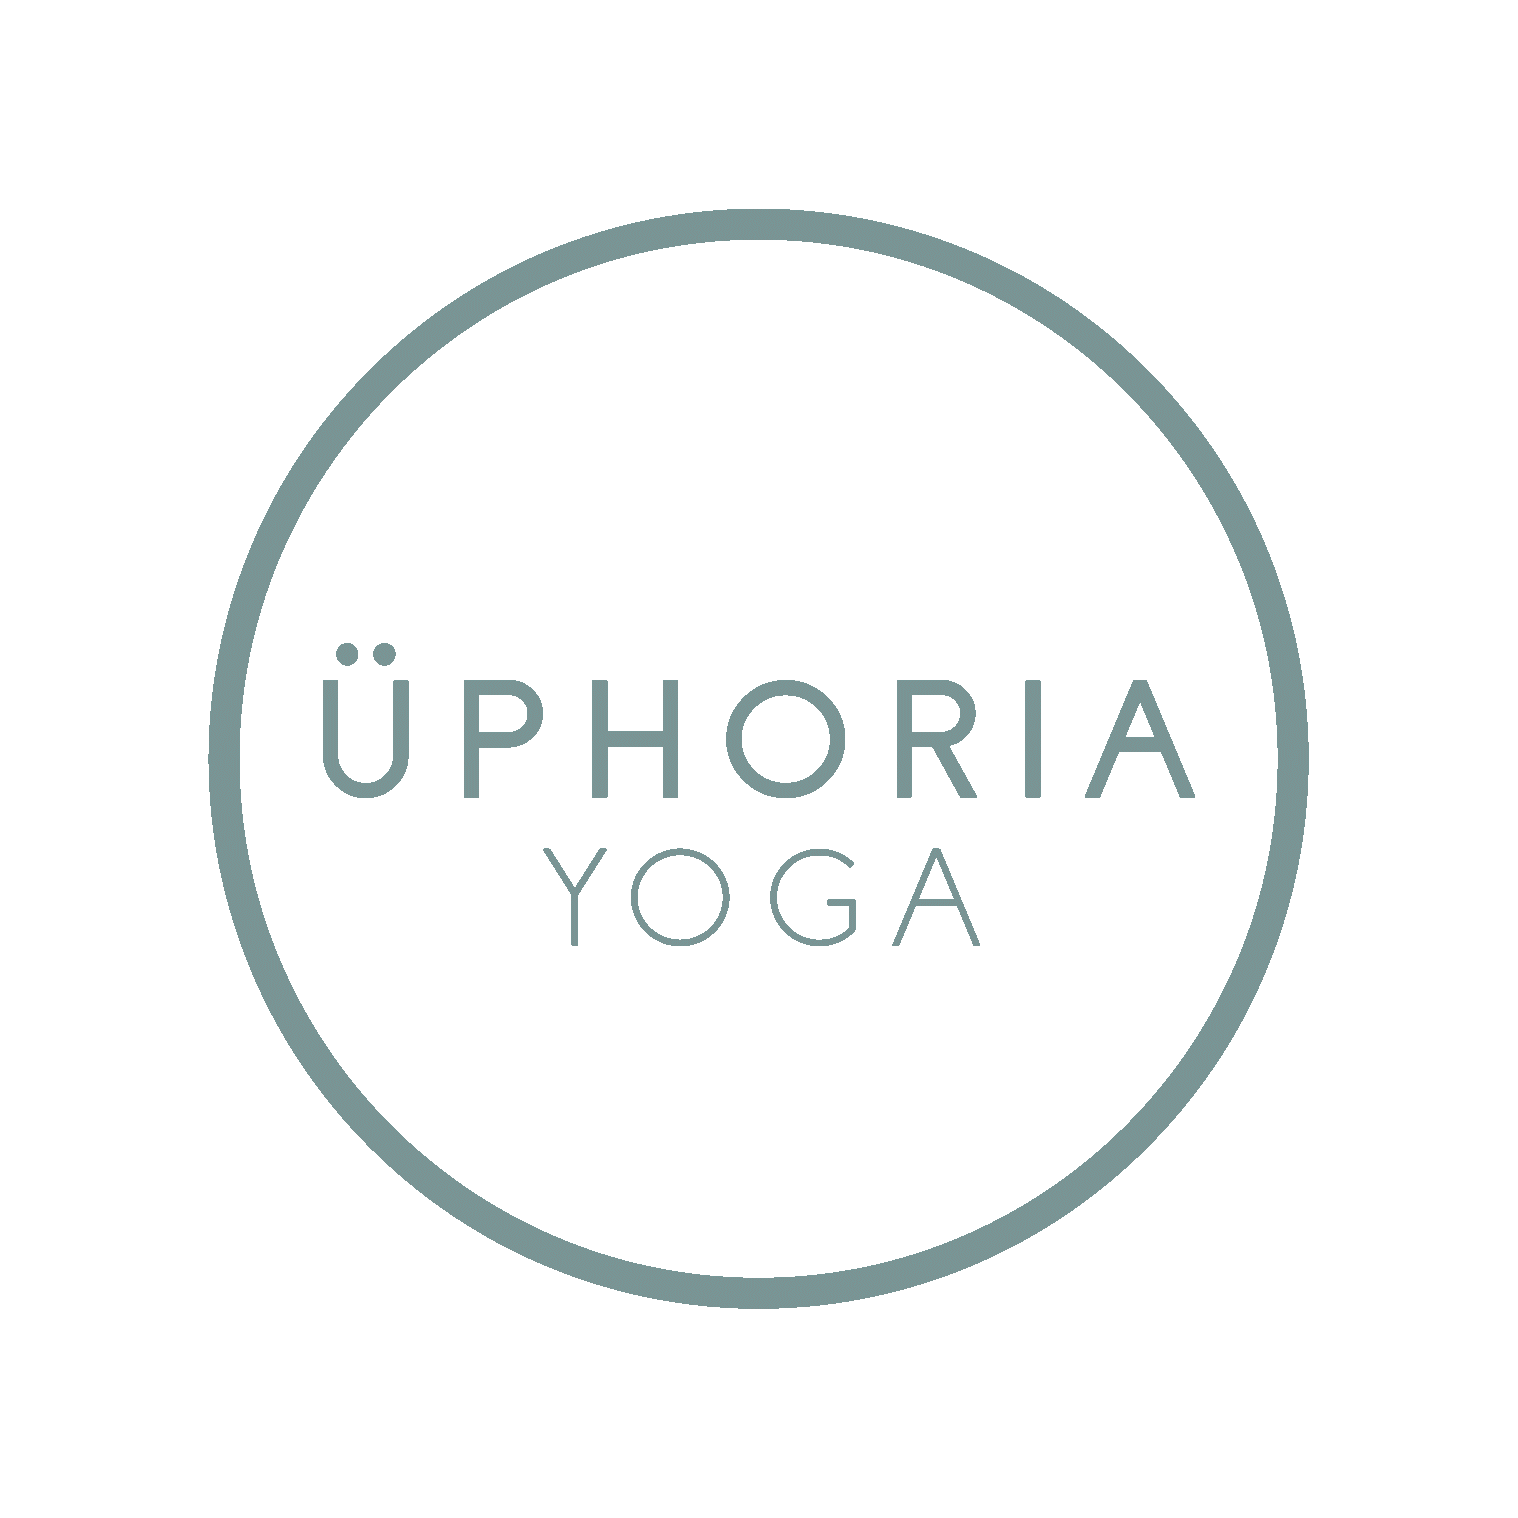 Uphoria yoga studio logo